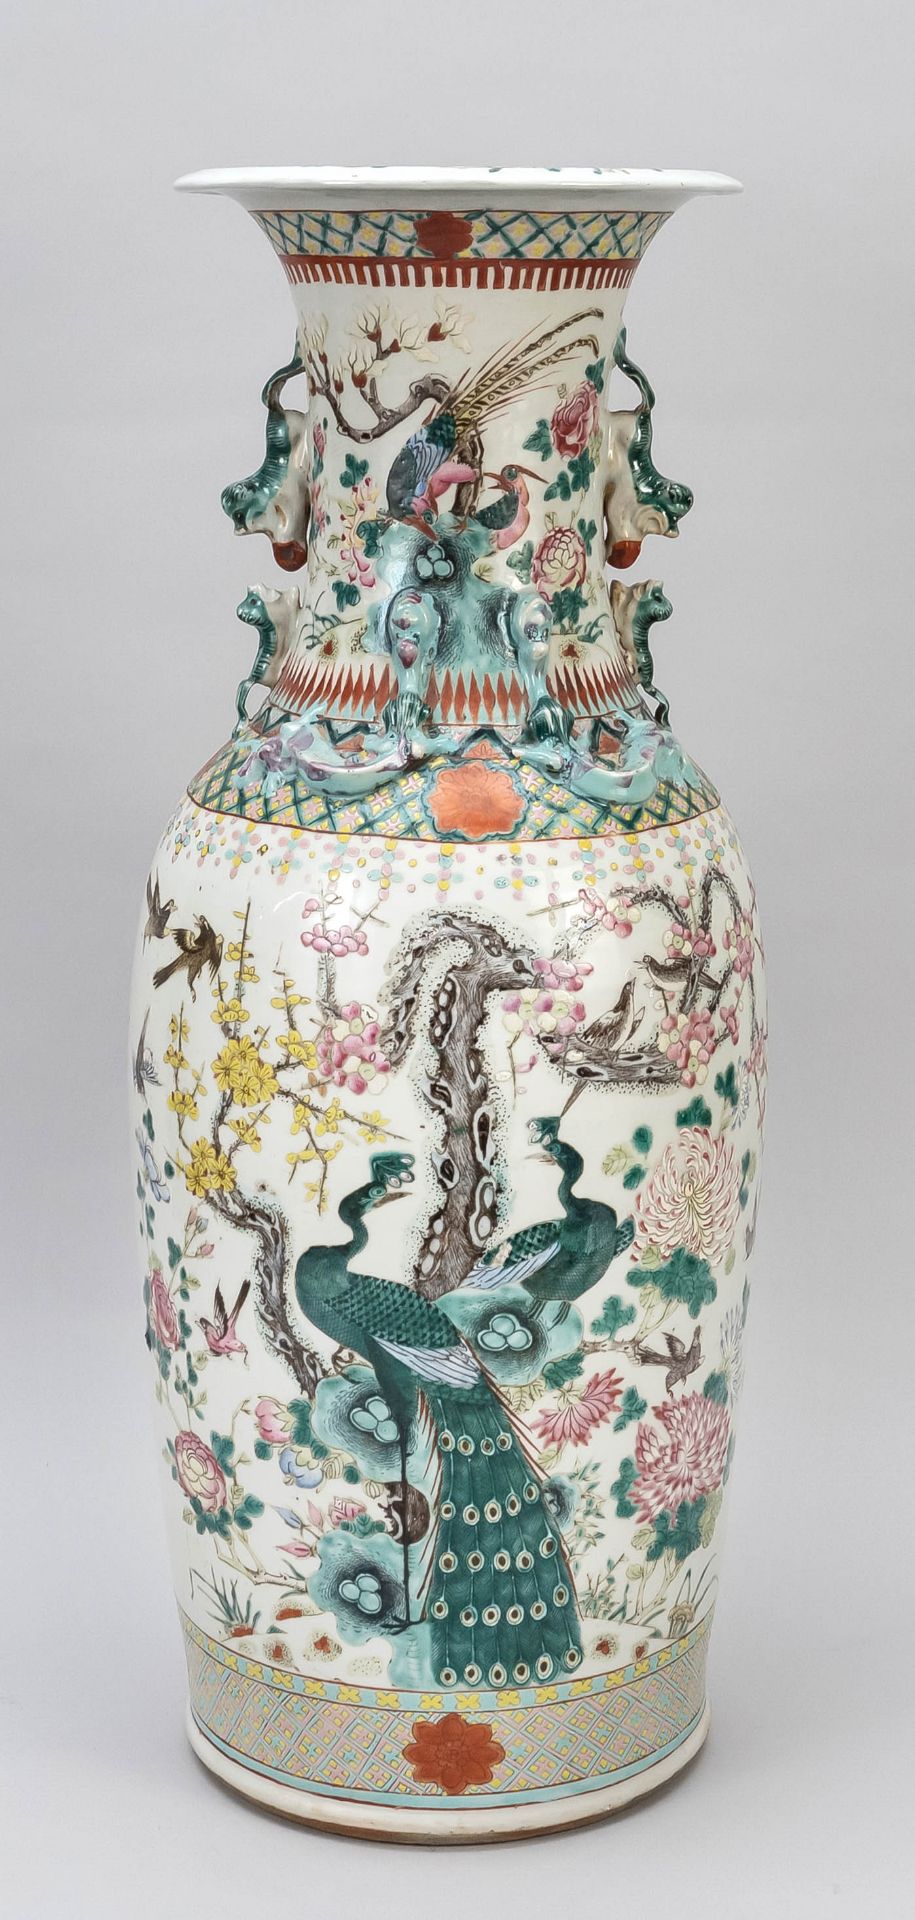 Bottom vase Verte family, China, porcelain with rich polychrome enamel decoration of birds and